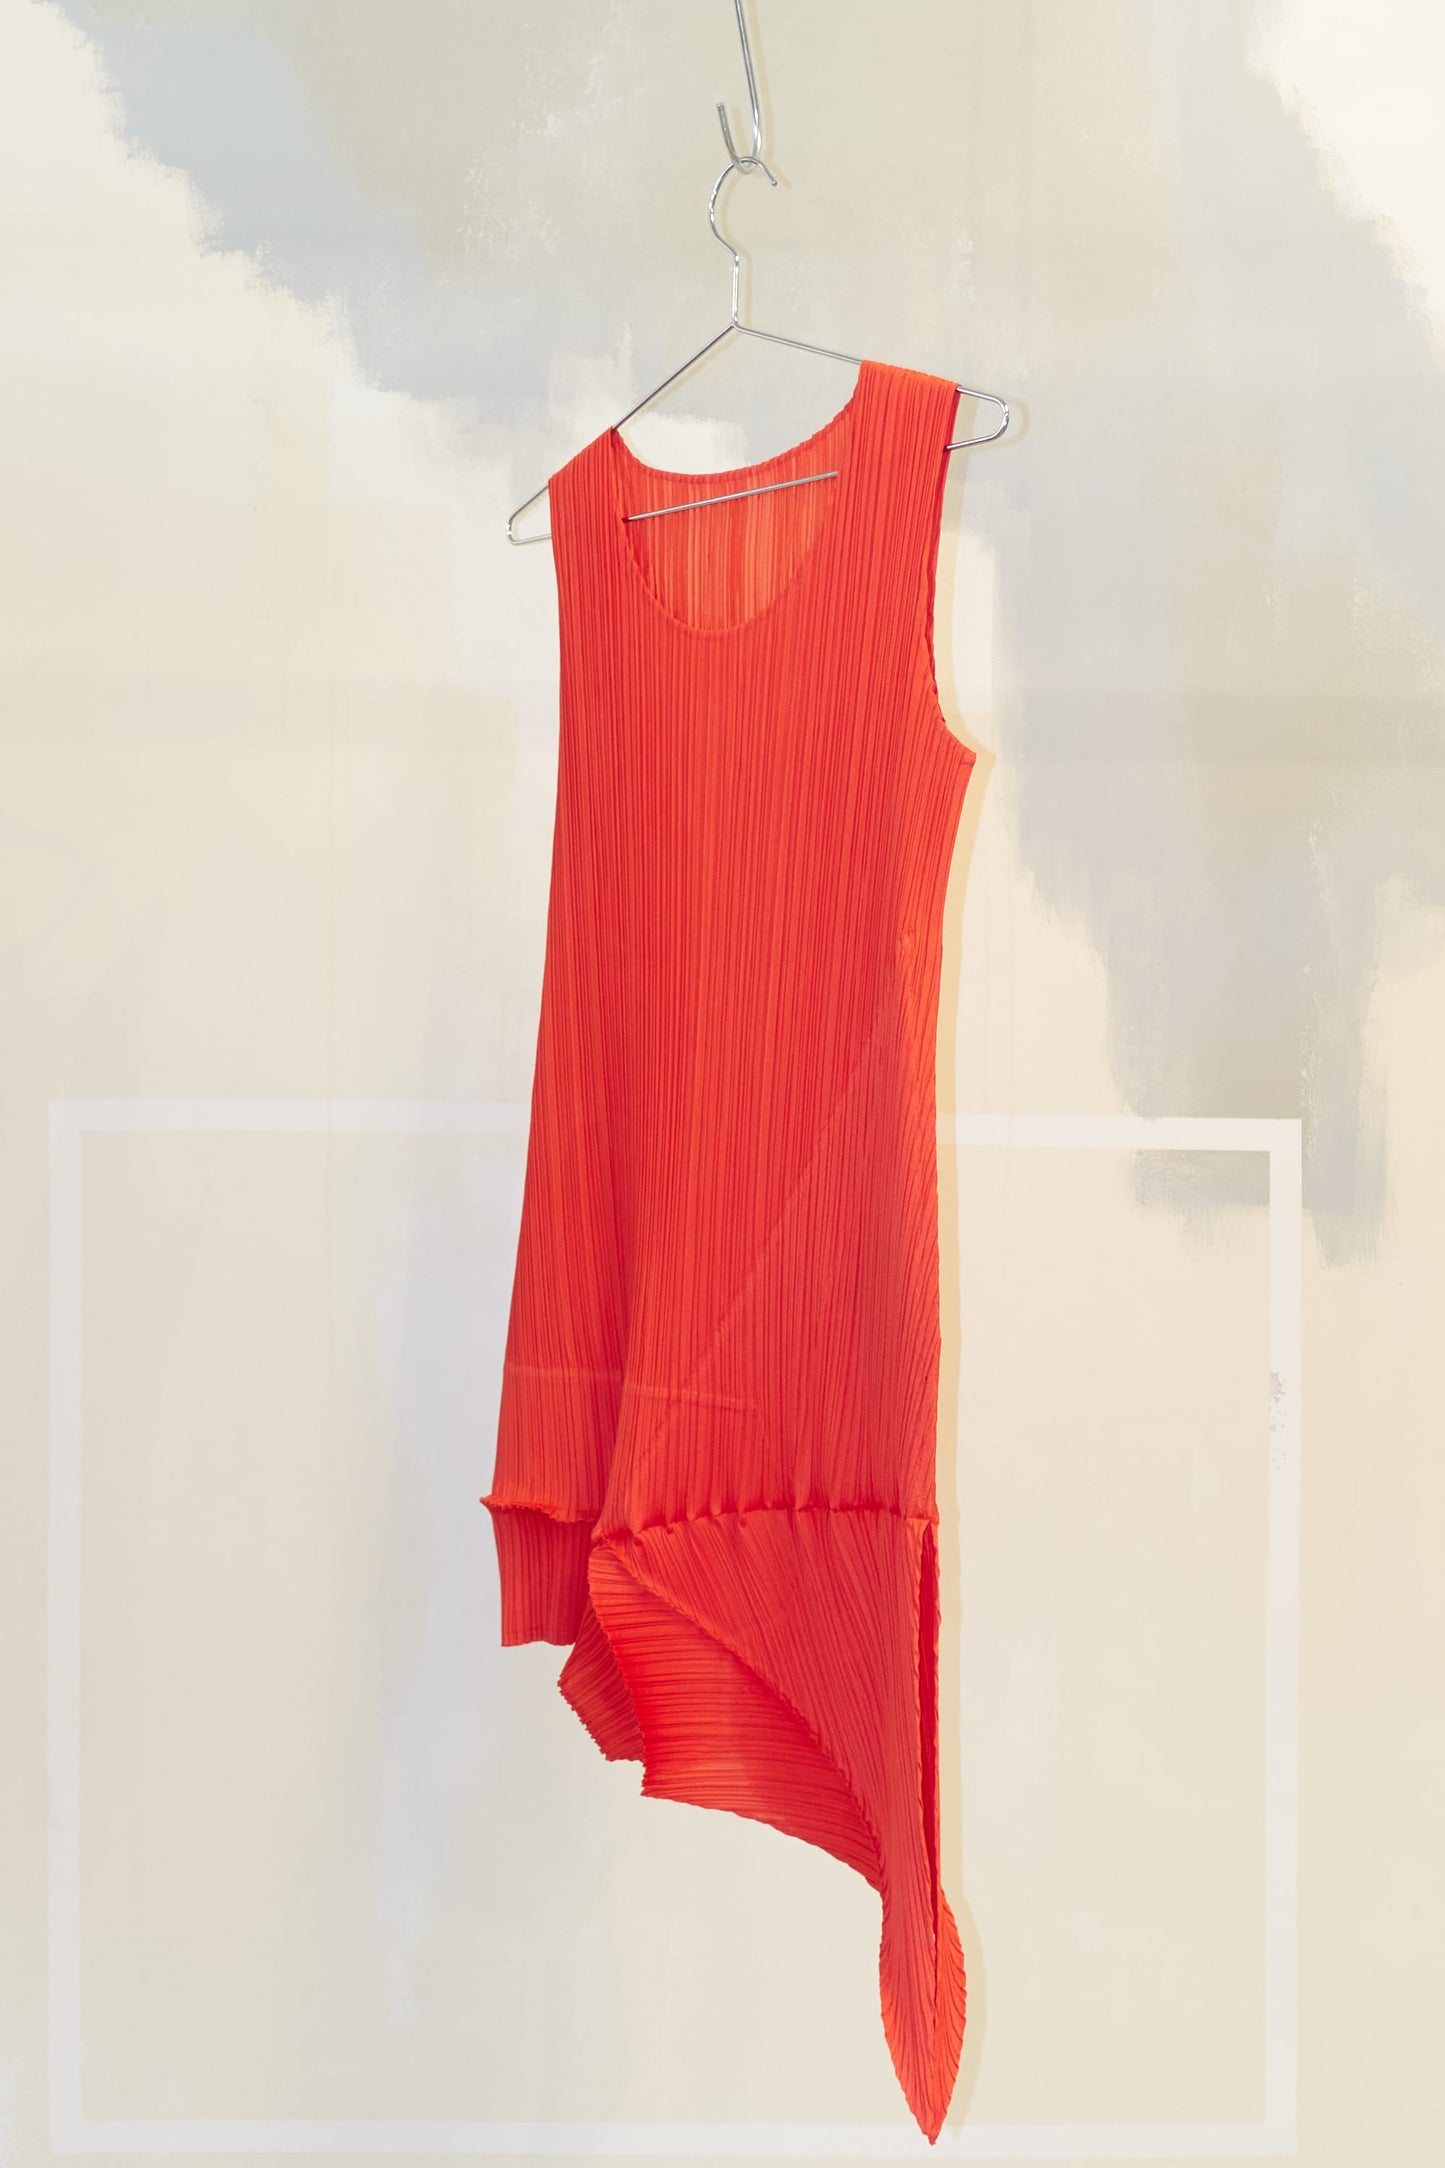 Issey Miyake Pleats Please  red tunic / mini dress